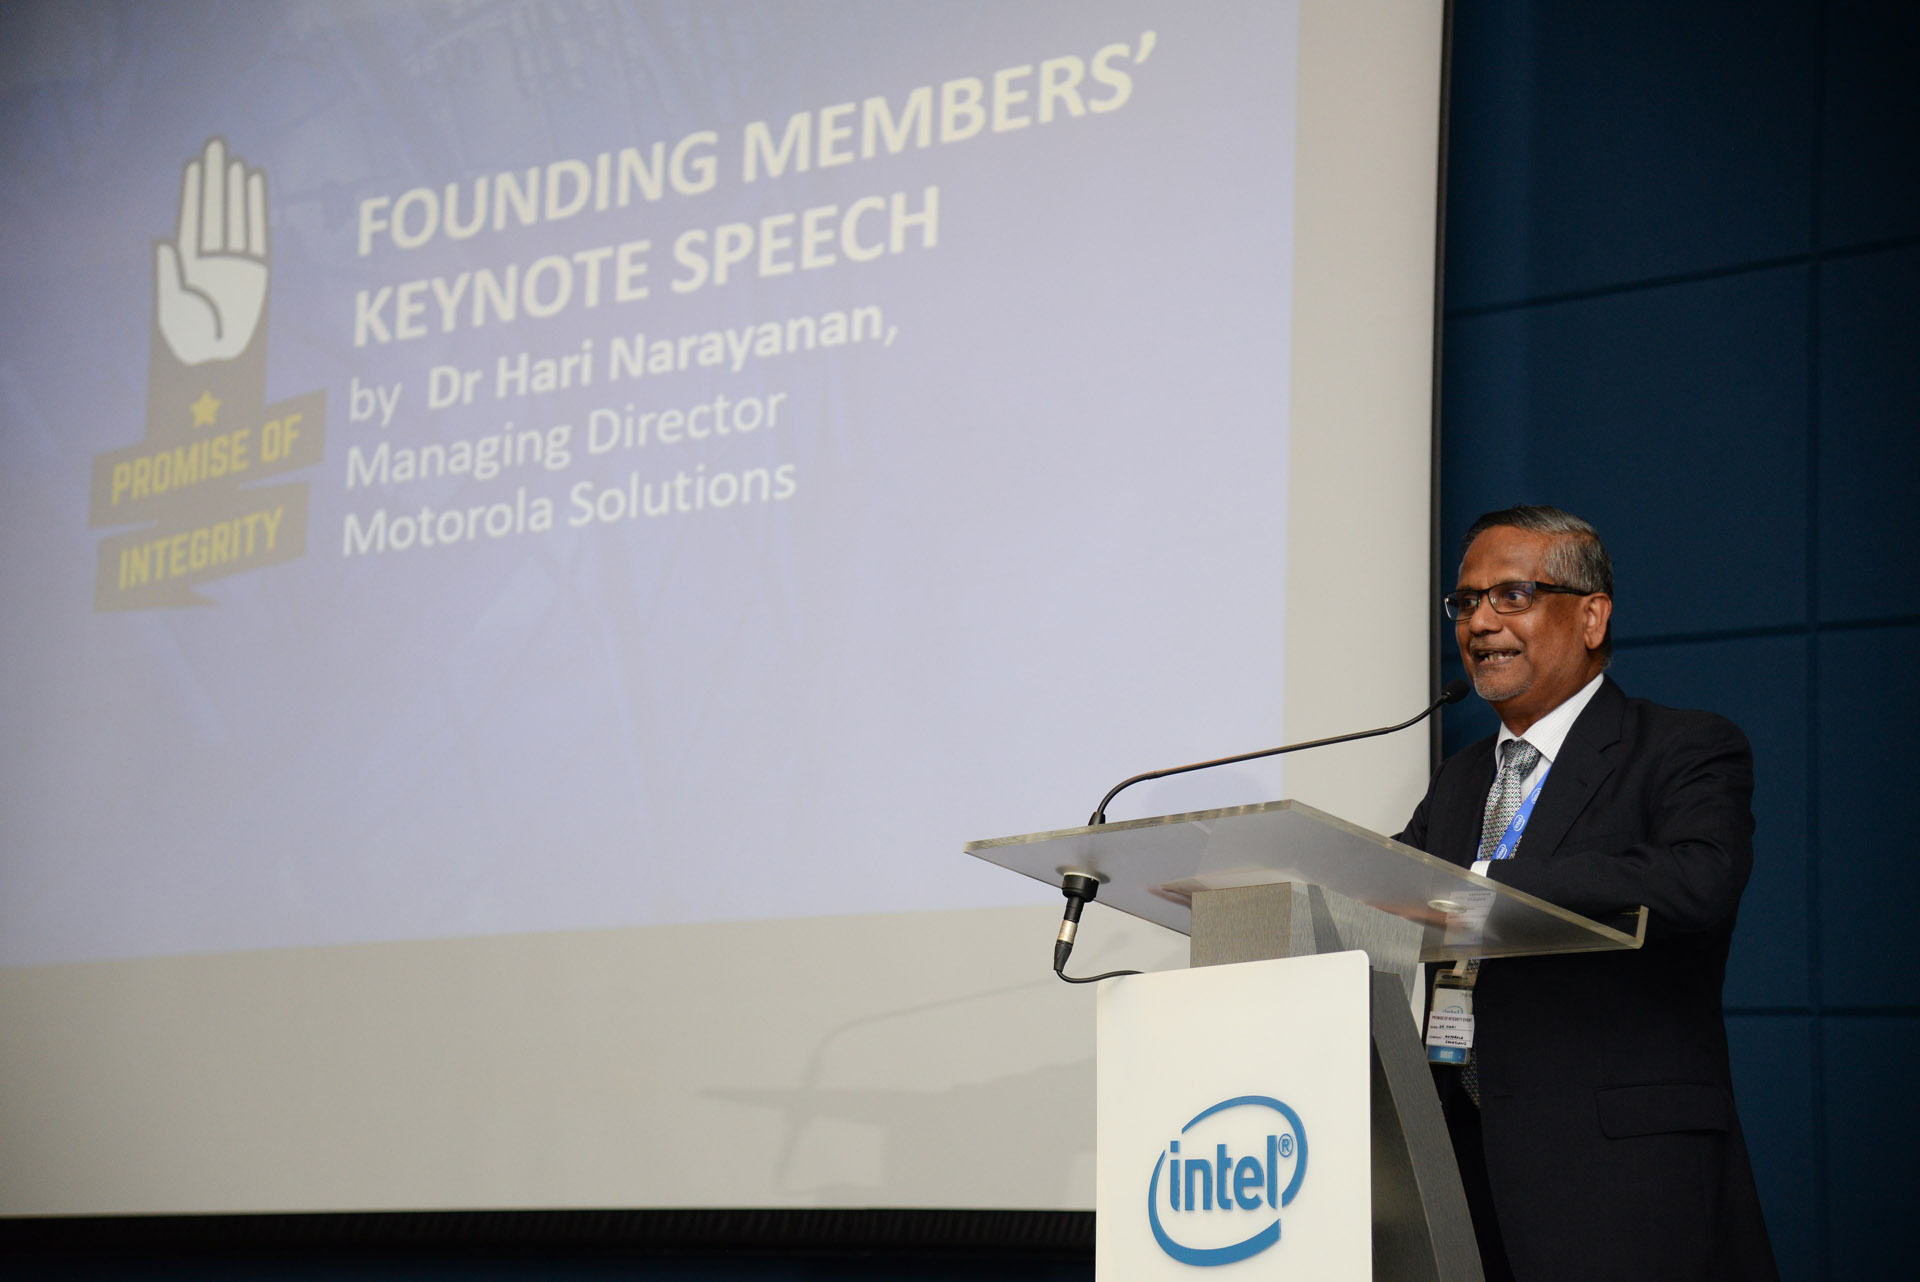 Dr Hari Narayanan, Managing Director of Motorola Solutions Malaysia giving the Founding Members' Keynote Speech